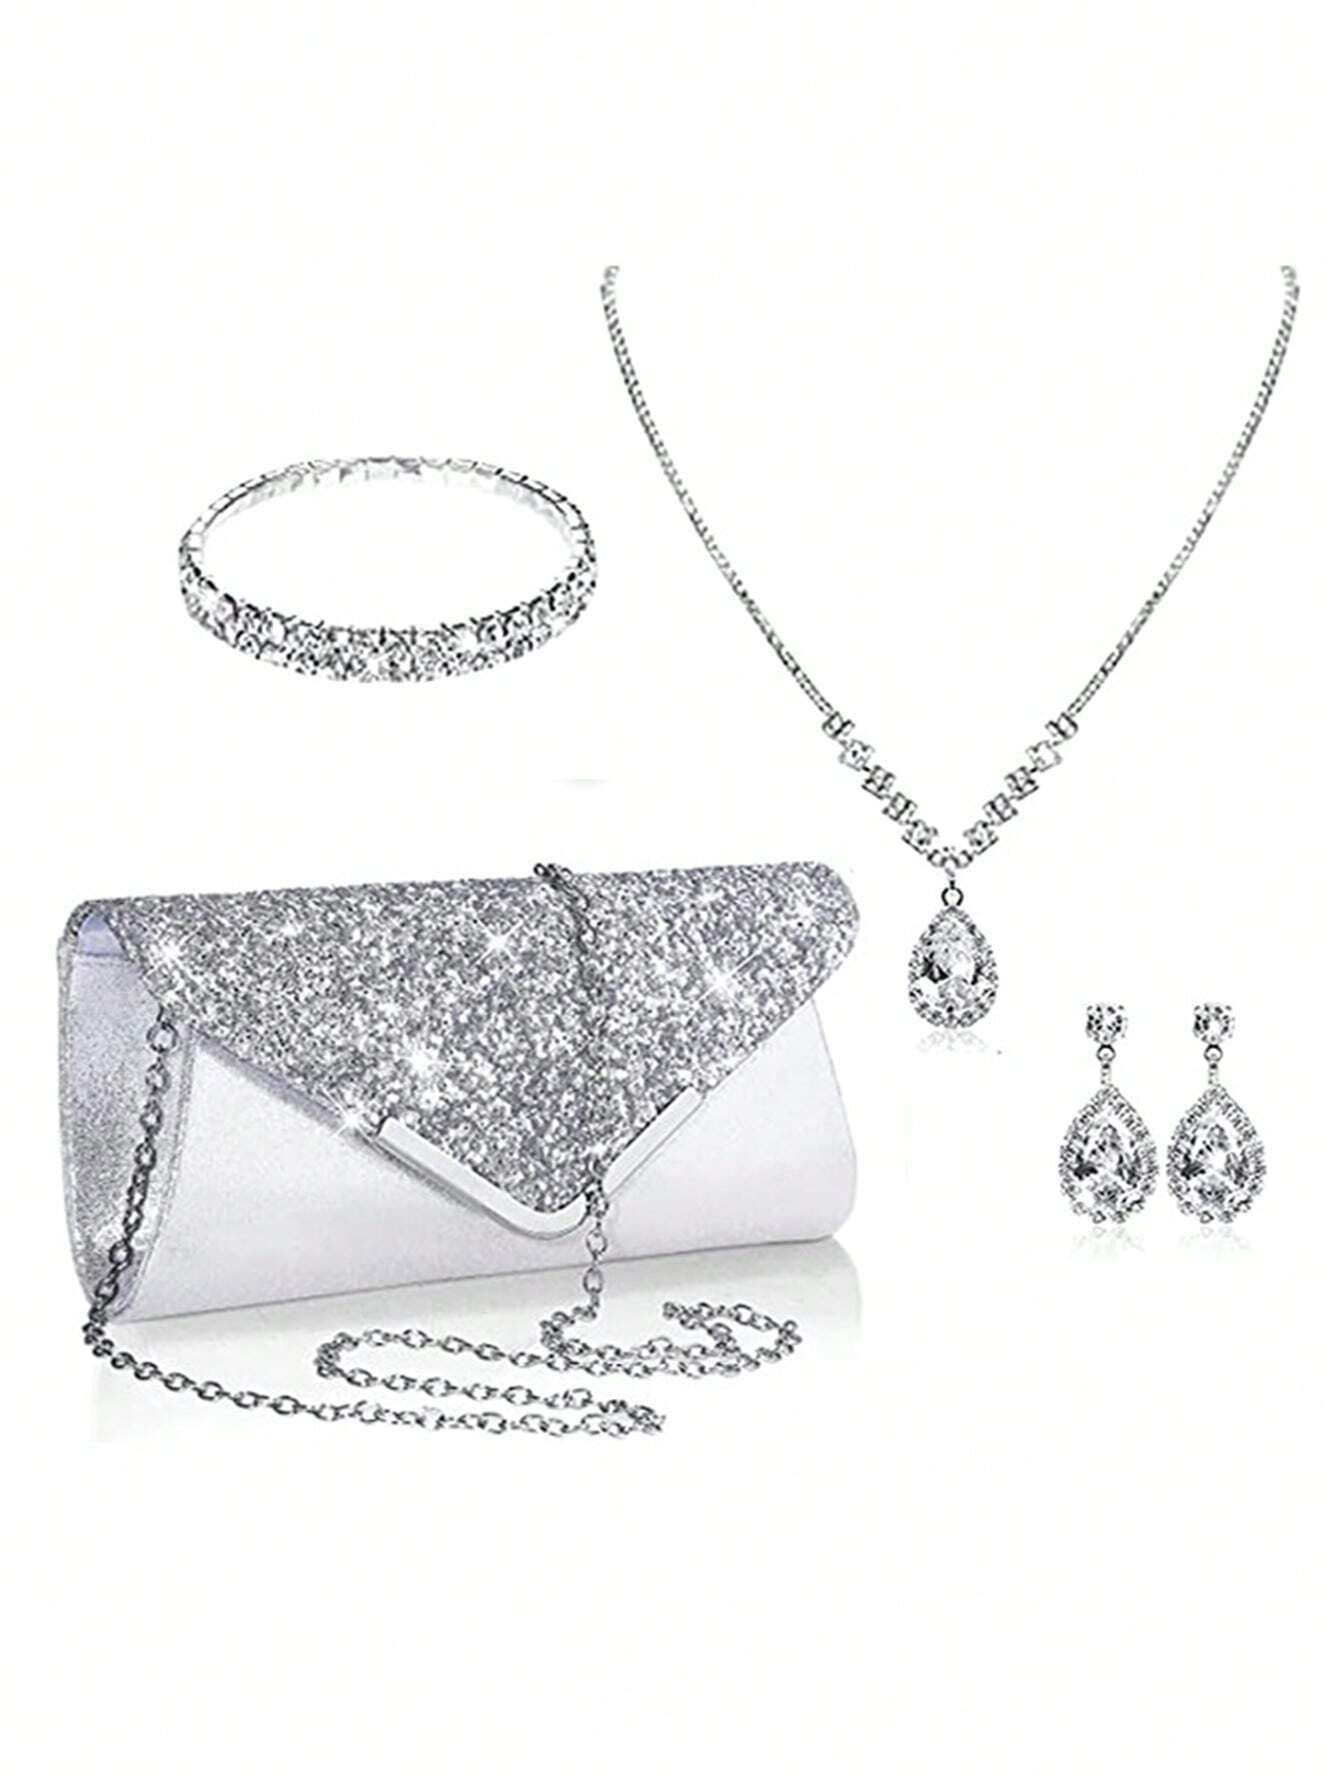 Glamorous,Exquisite,Quiet Luxury Women's Elegant Sparkling Decoration Evening Clutch Bag With Diamond Chain Strap And Bracele